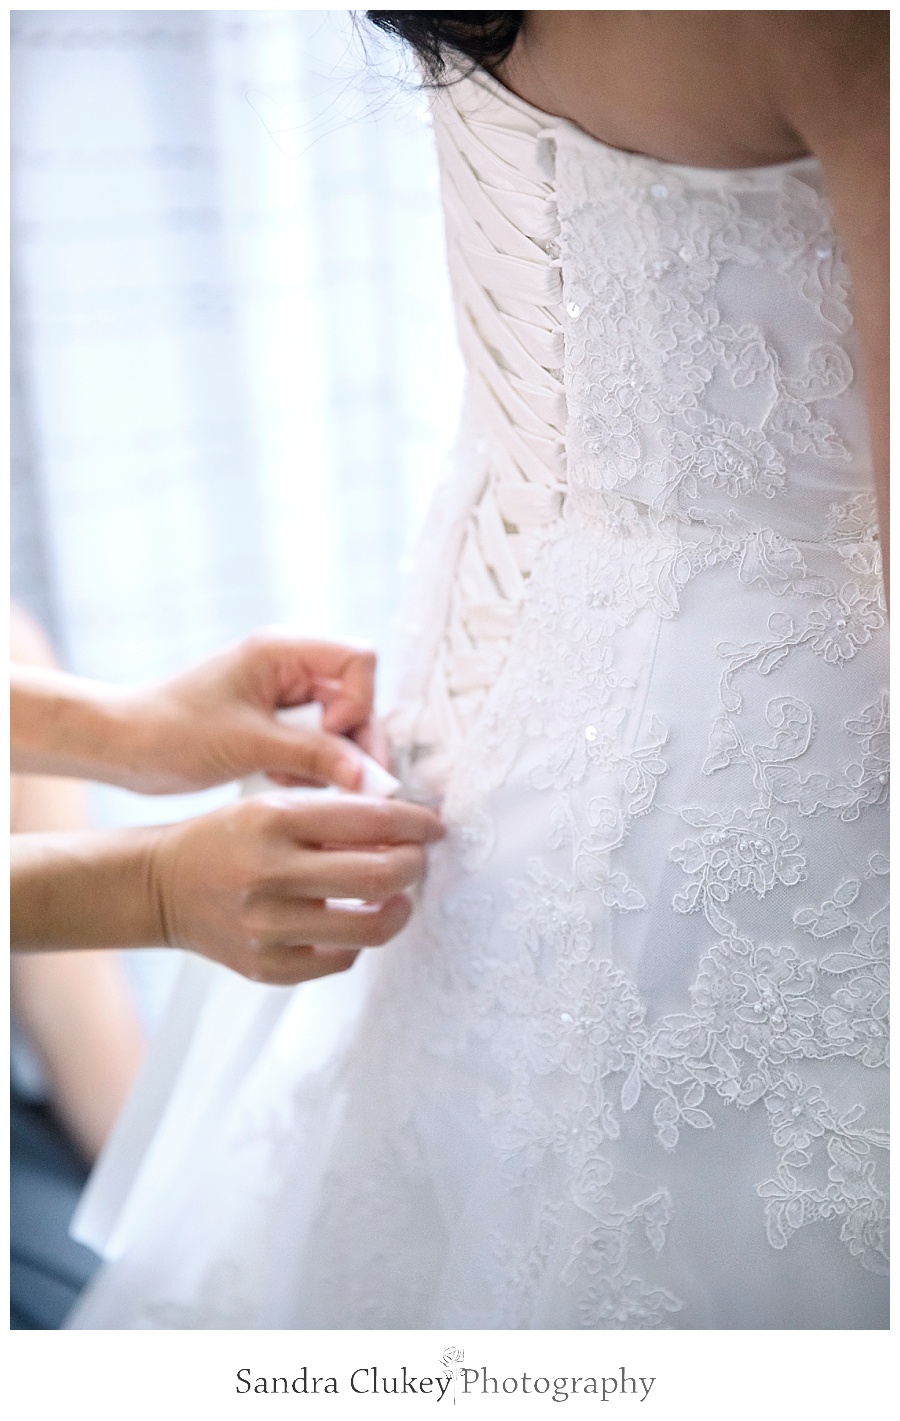 Tying brides dress